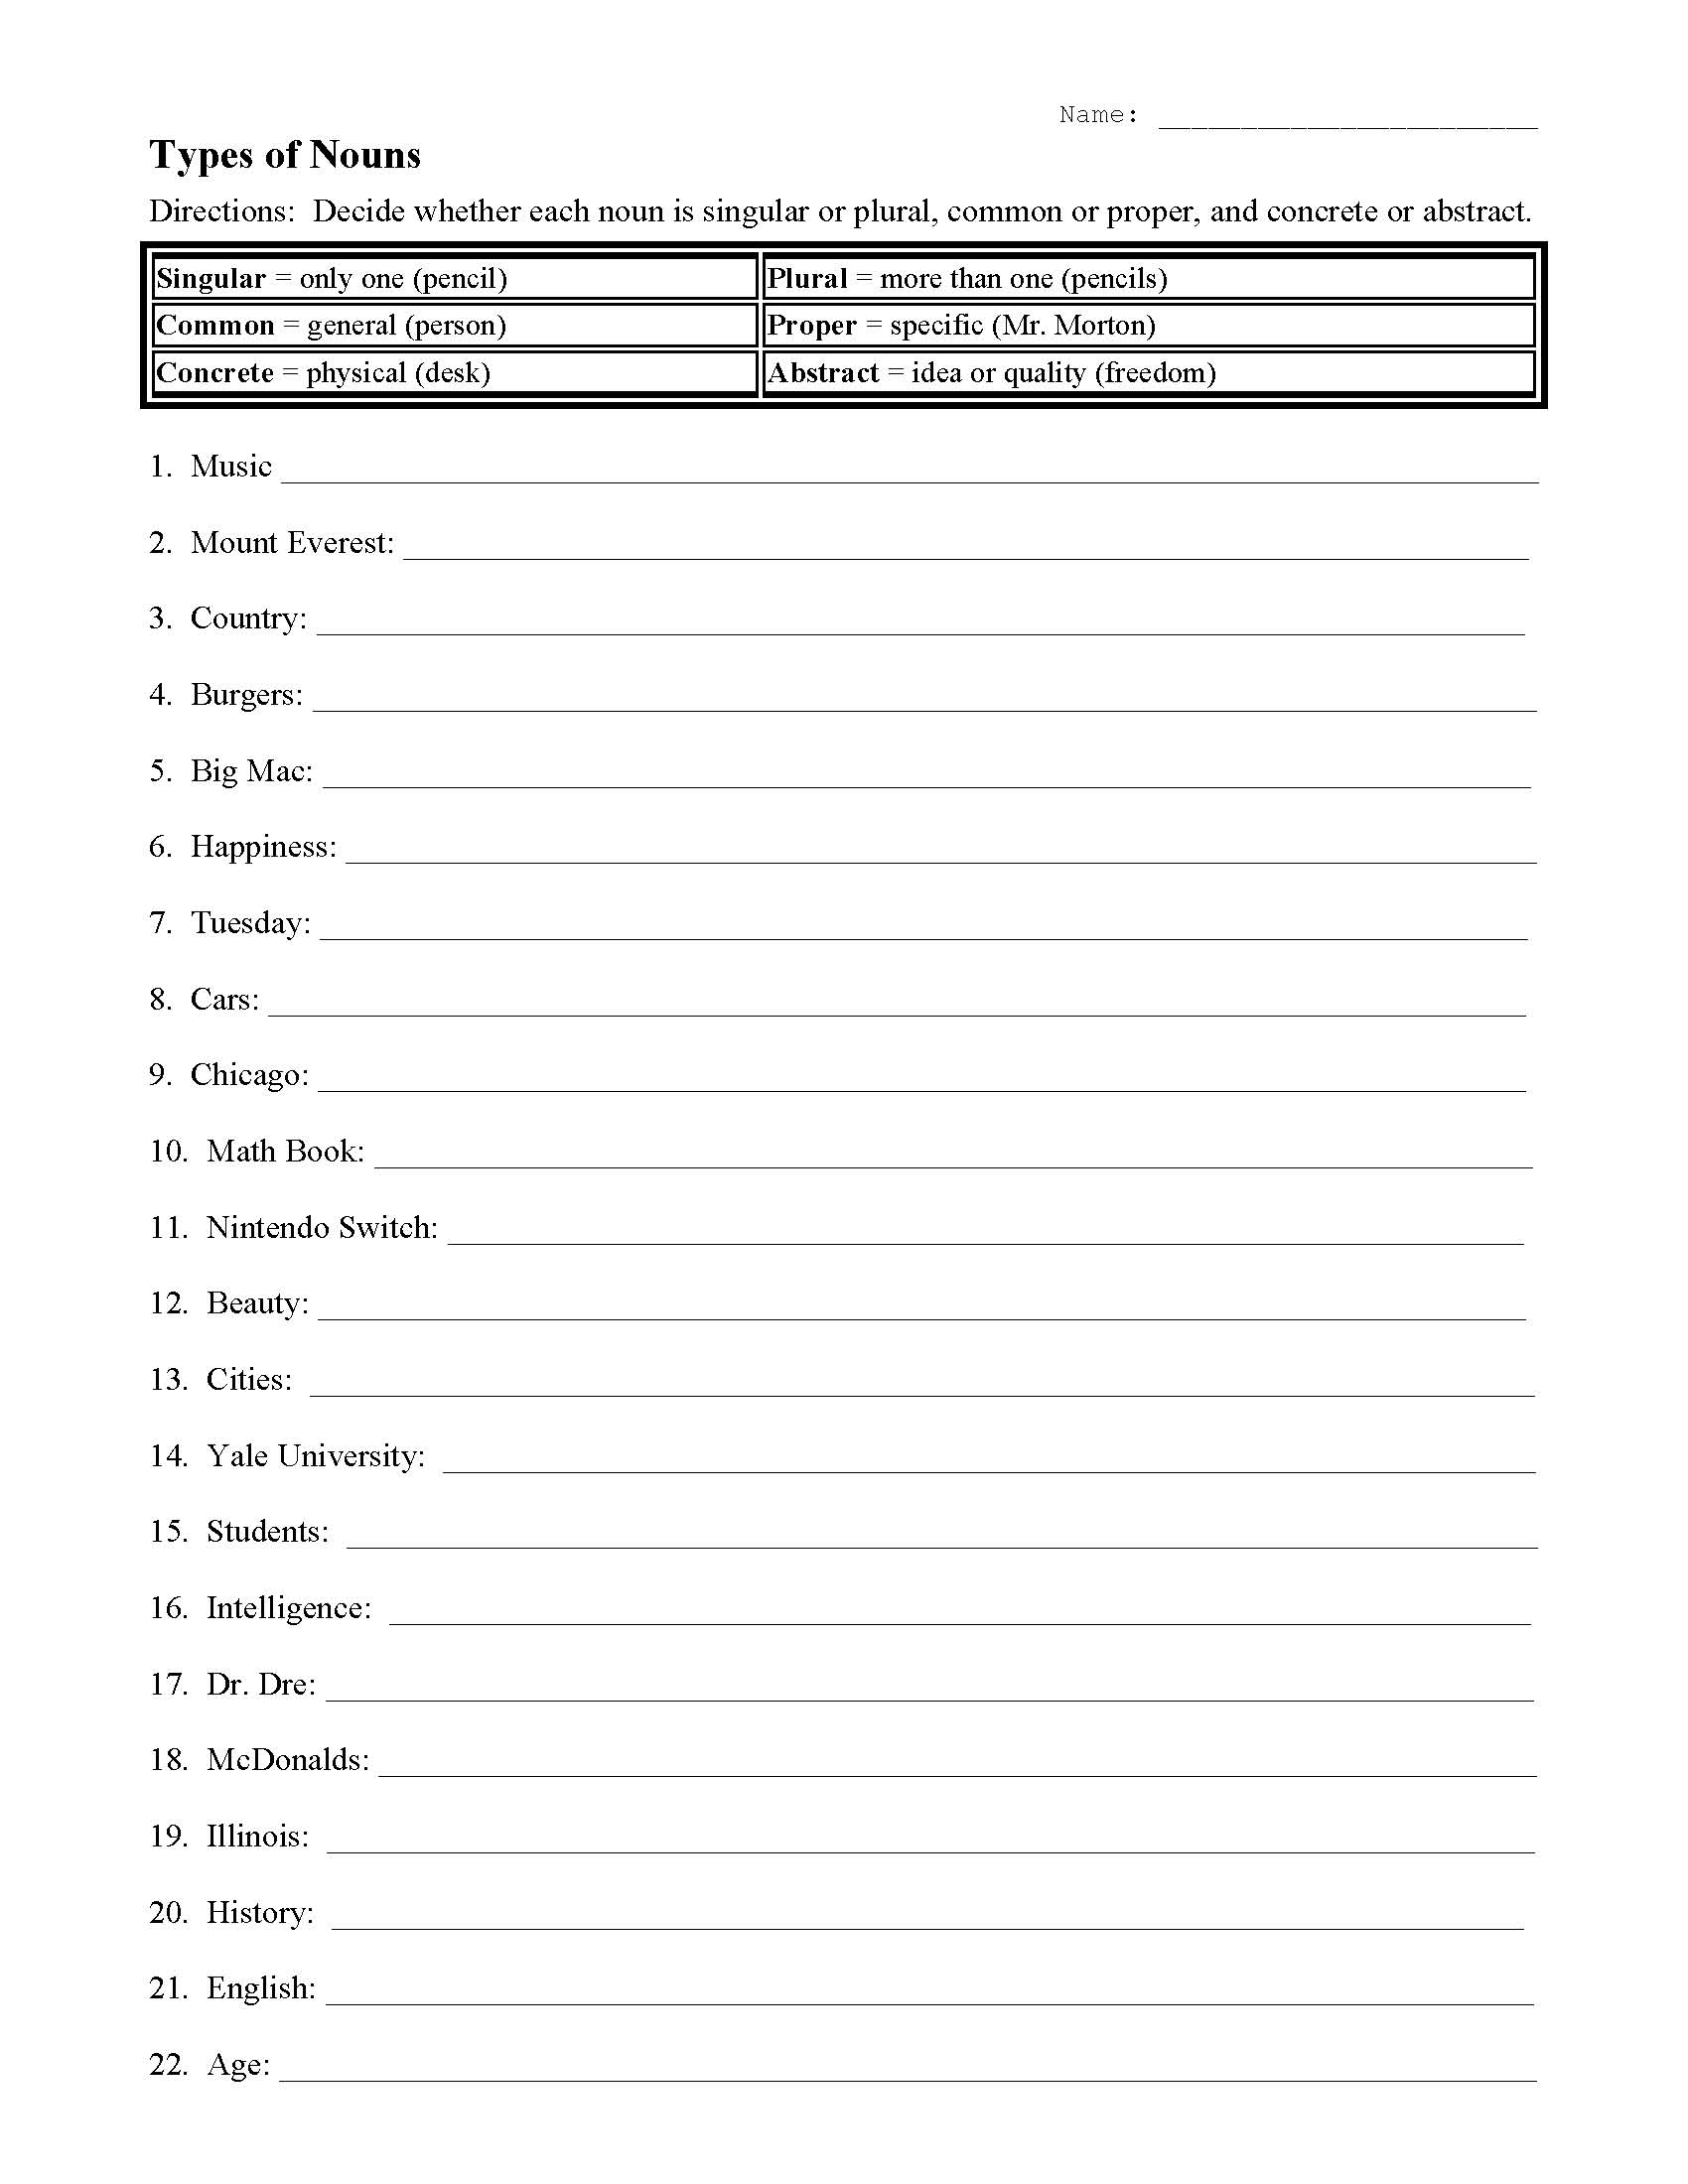 noun types worksheet 2 preview